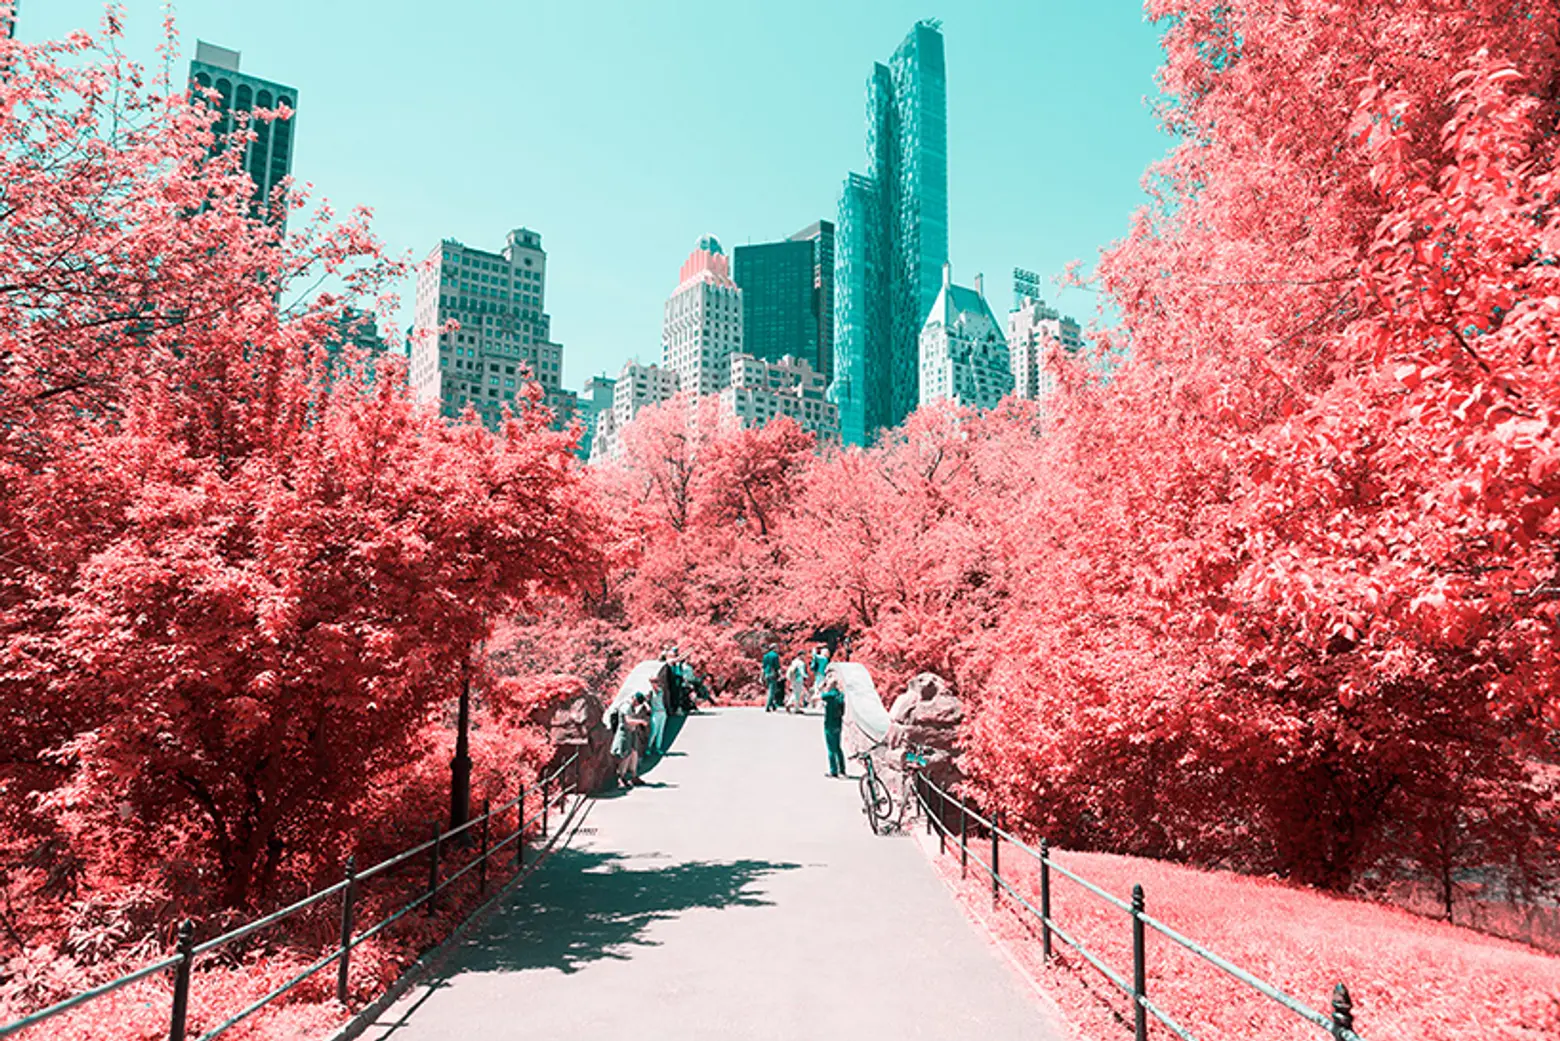 Infrared Photos Show Central Park in Candy Colors; Pier 55 vs. London’s Garden Bridge